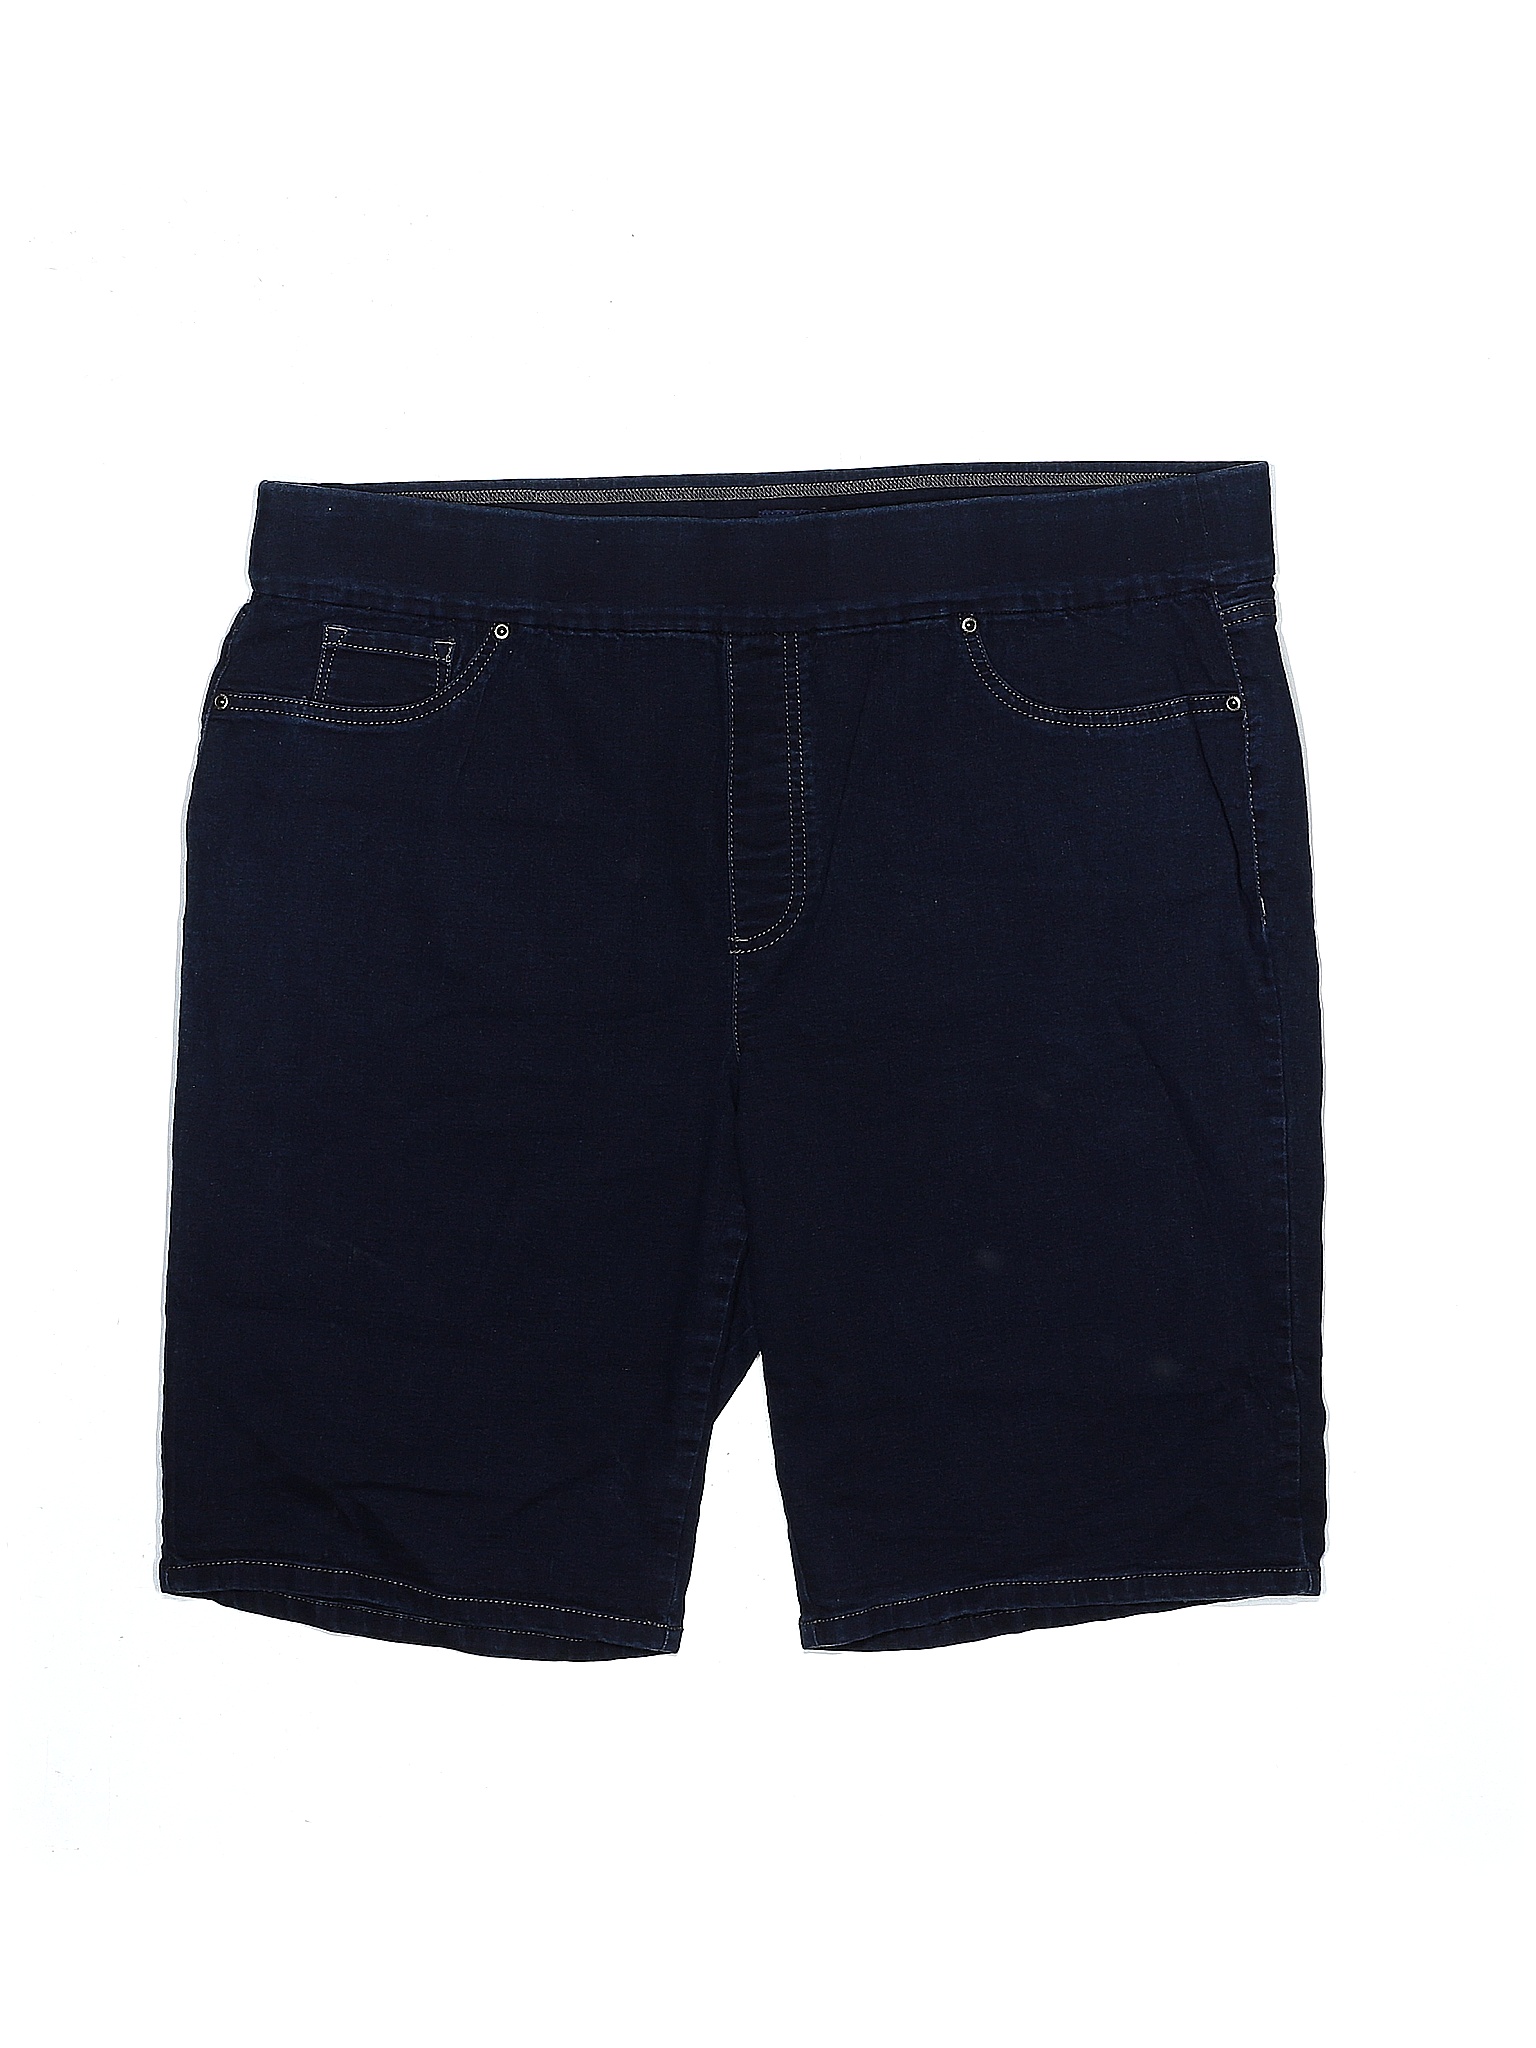 Basic Editions Solid Blue Denim Shorts Size XXL - 55% off | thredUP